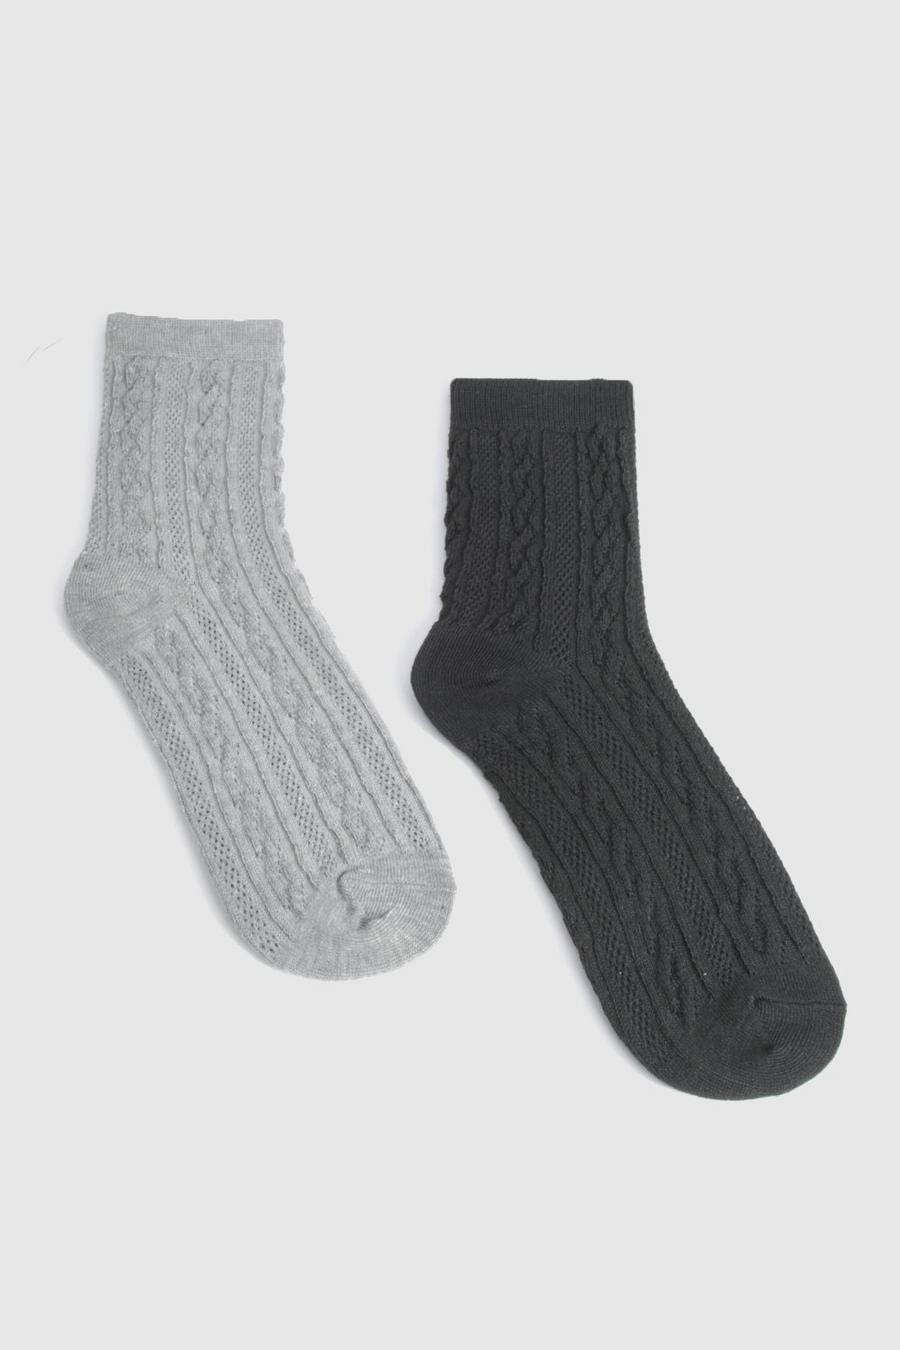 2er-Pack Zopfmuster Loungewear-Socken in schwarz und grau, Multi image number 1